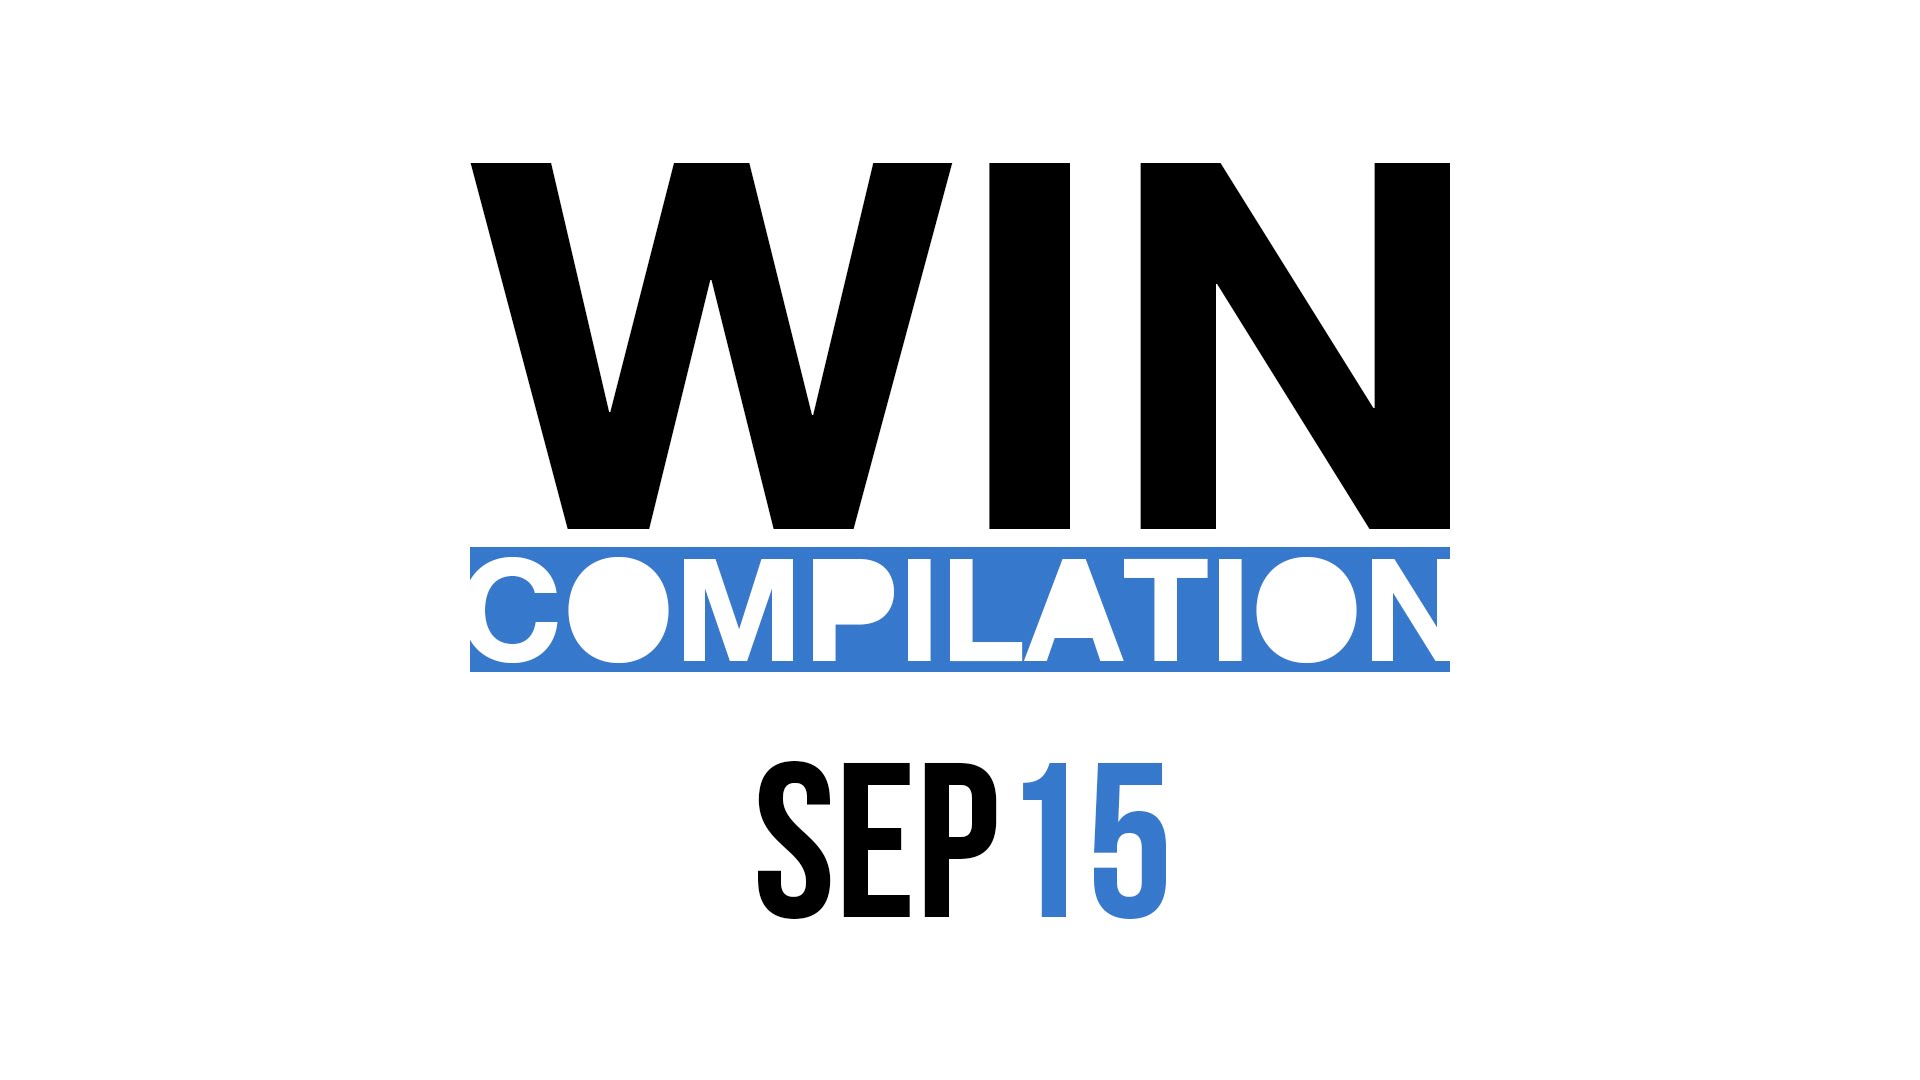 WIN Compilation September 2015 | 2015 | Was is hier eigentlich los?